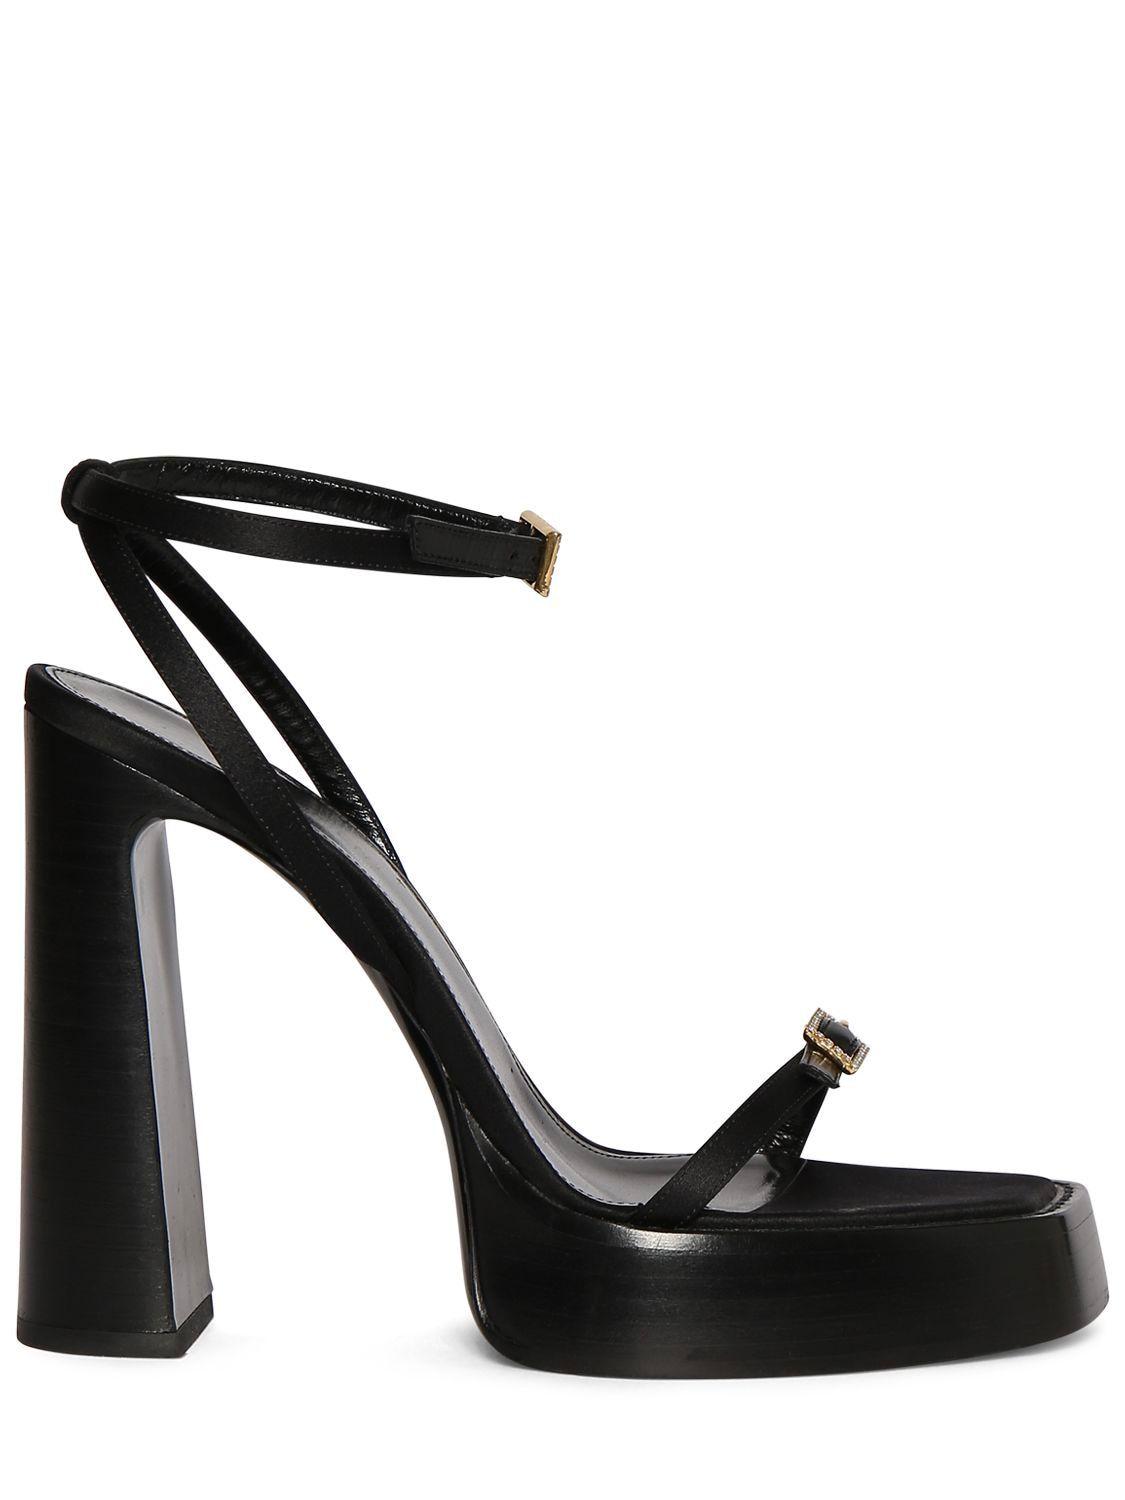 Saint Laurent 105mm Platz Crepe Satin Sandals in Black | Lyst